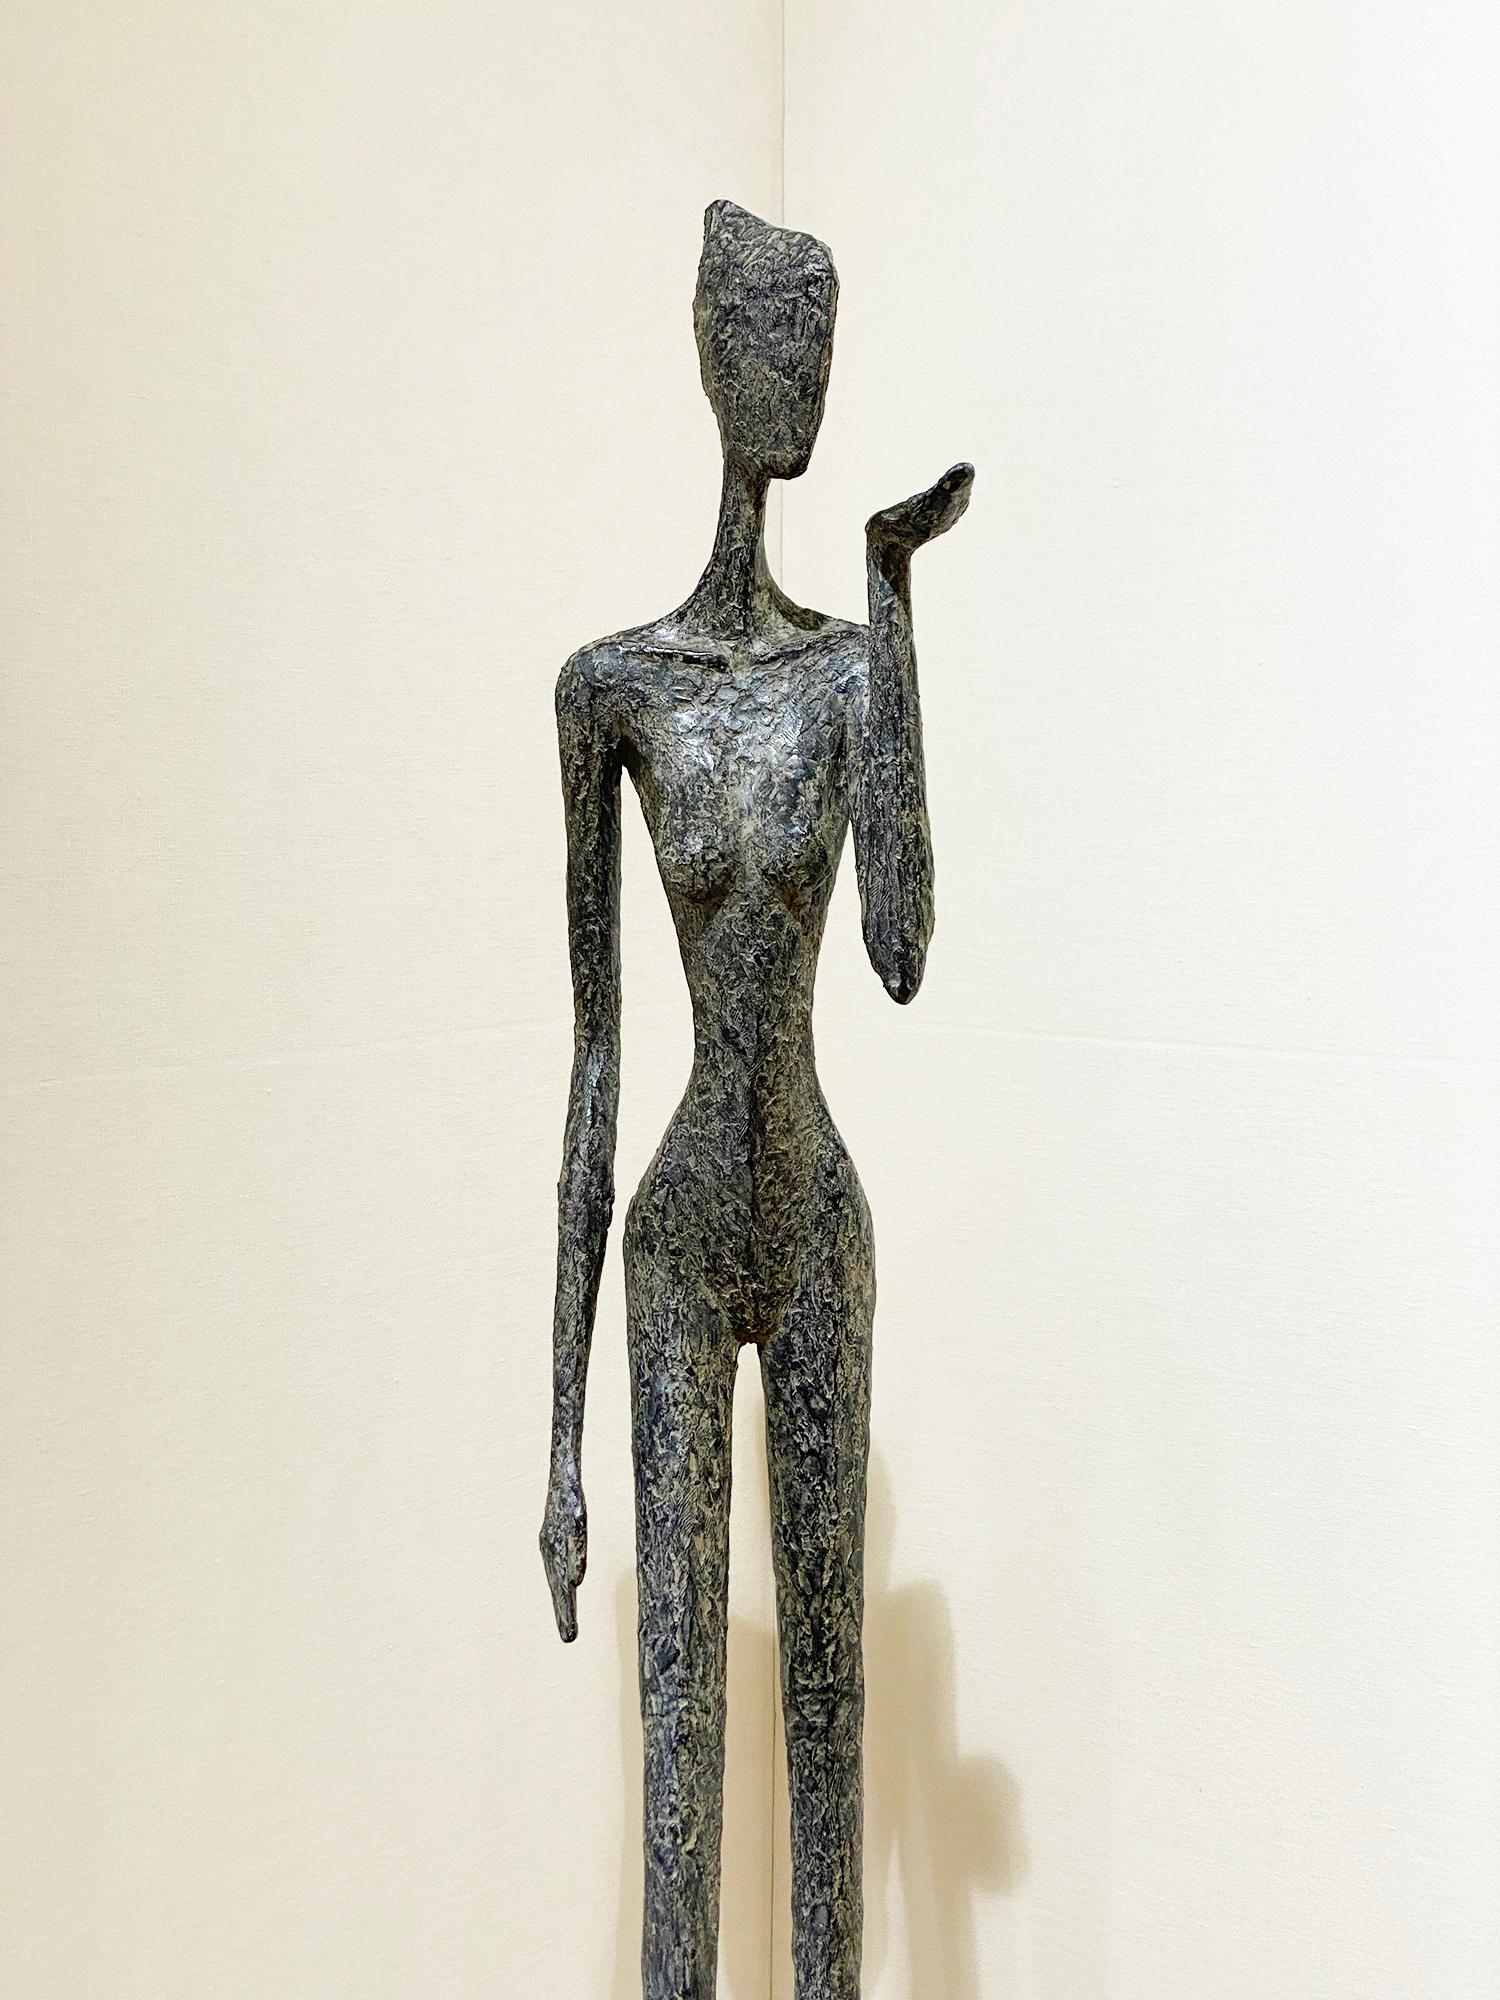 Sylvie Mangaud Nude Sculpture -  Sentiment figurative nude bronze woman blowing kiss Giacometti style S. Mangaud